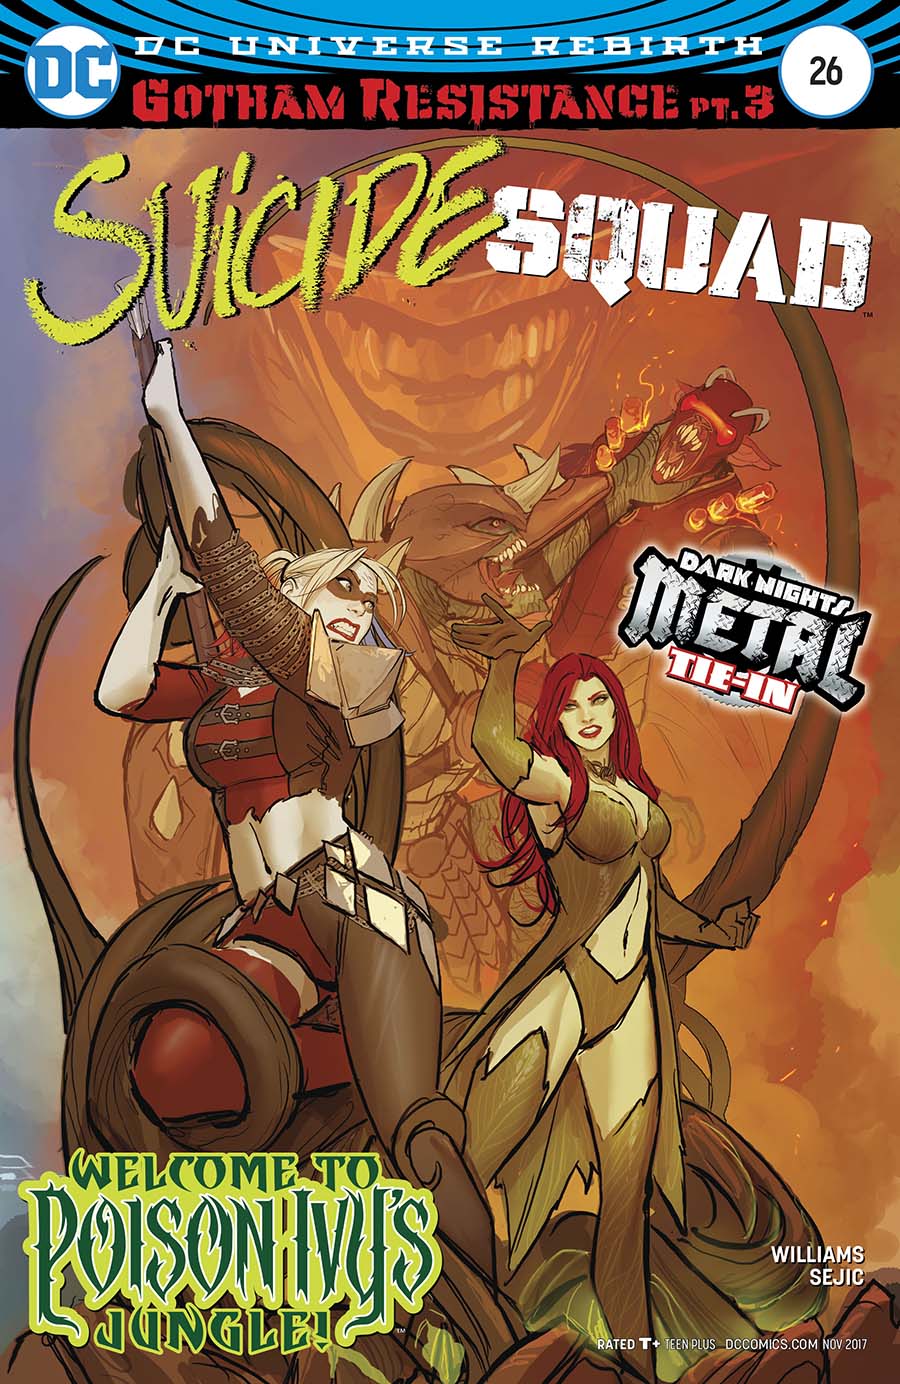 Suicide Squad Vol 4 #26 Cover A Regular Stjepan Sejic Cover (Gotham Resistance Part 3)(Dark Nights Metal Tie-In)